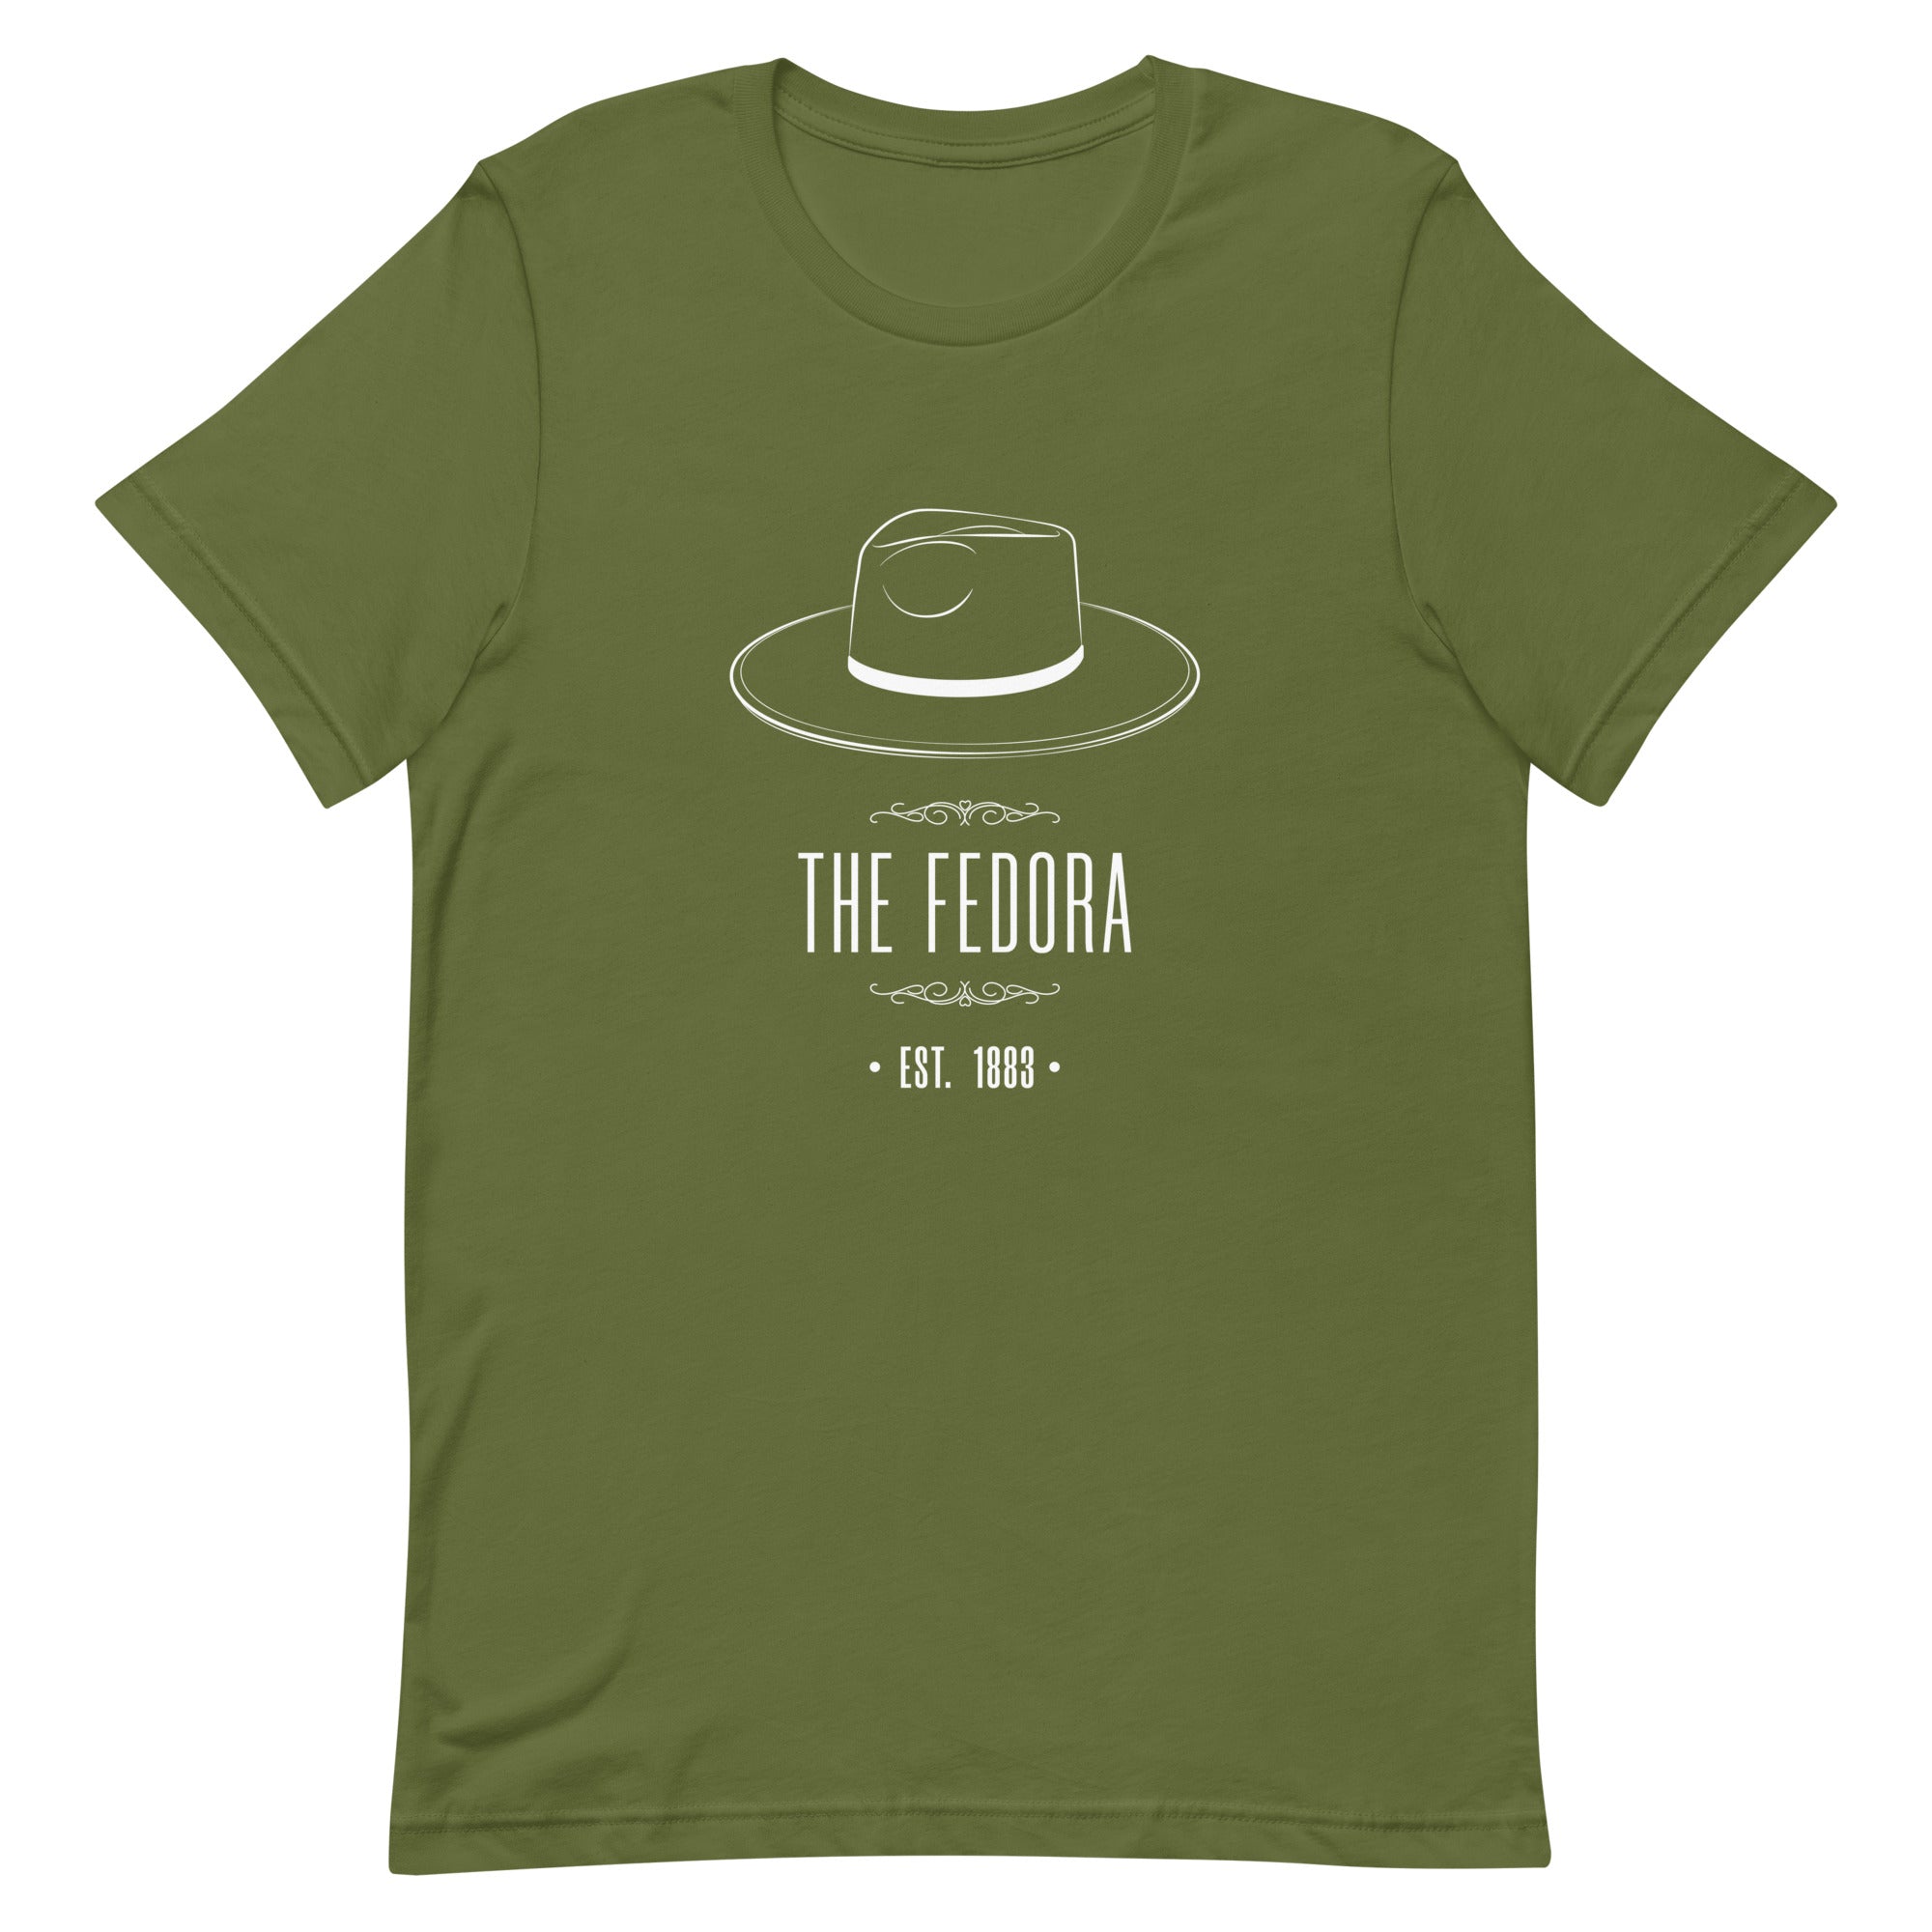 The Fedora Hat Tee